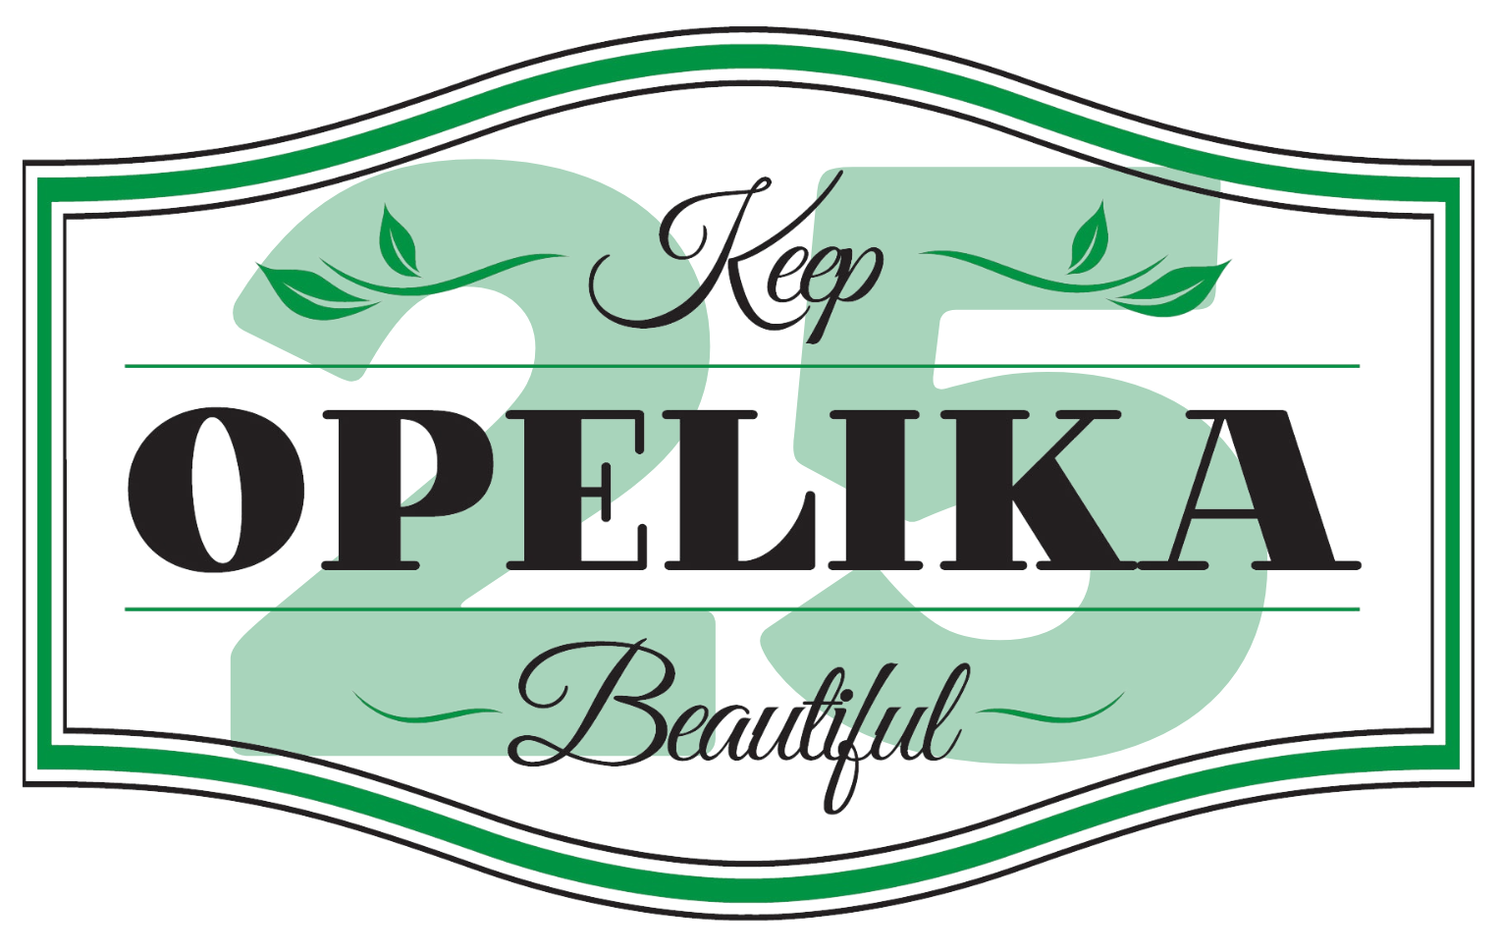 Keep Opelika Beautiful